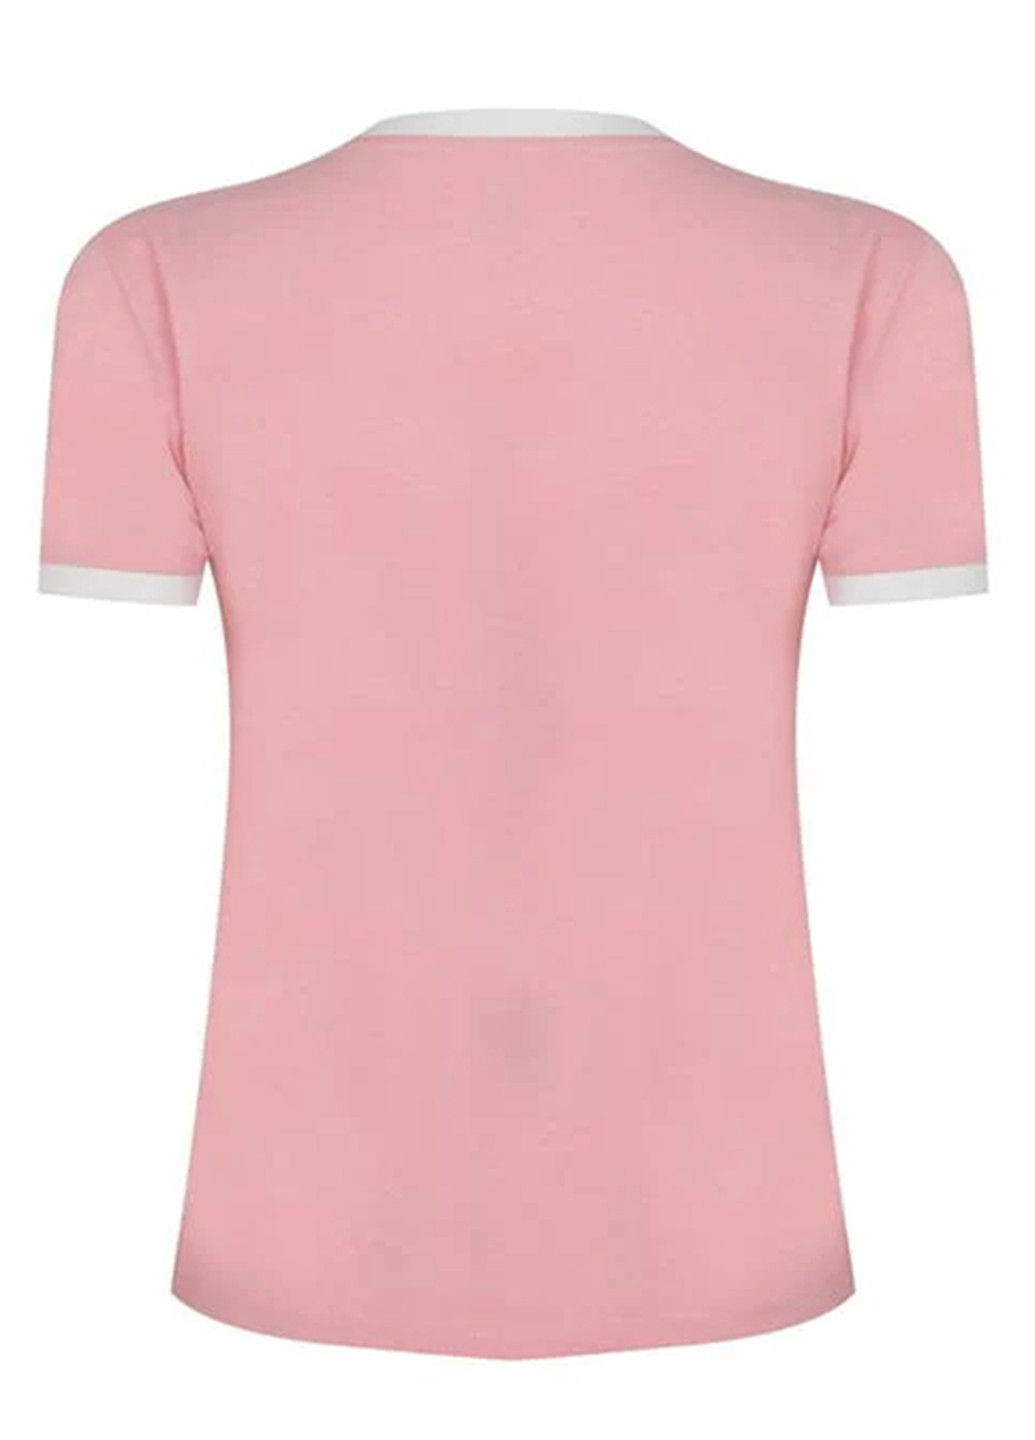 Светло-розовая летняя футболка Soulcal & Co